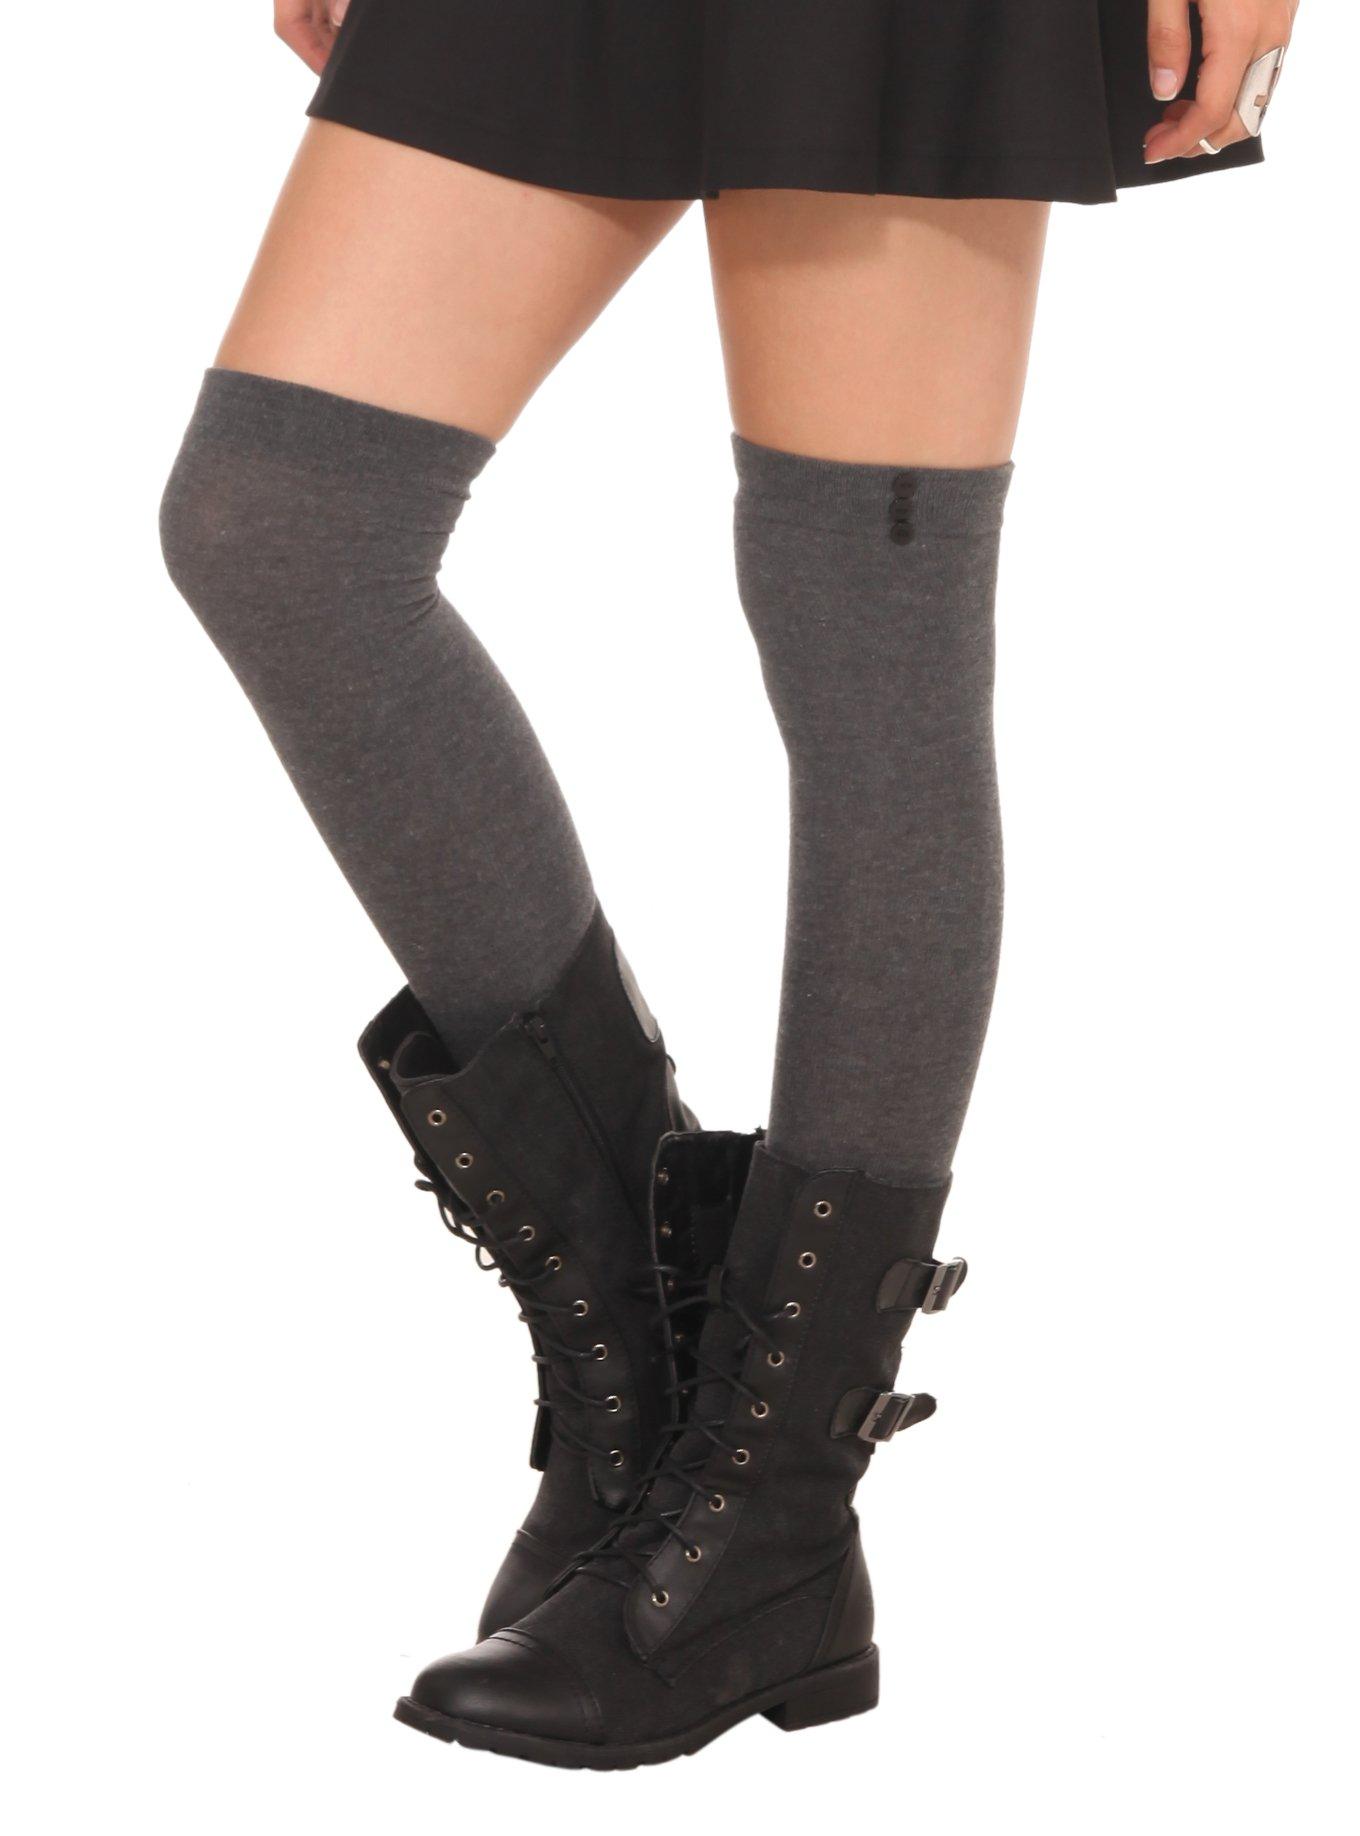 LOVEsick Grey Over-The-Knee Socks, , hi-res